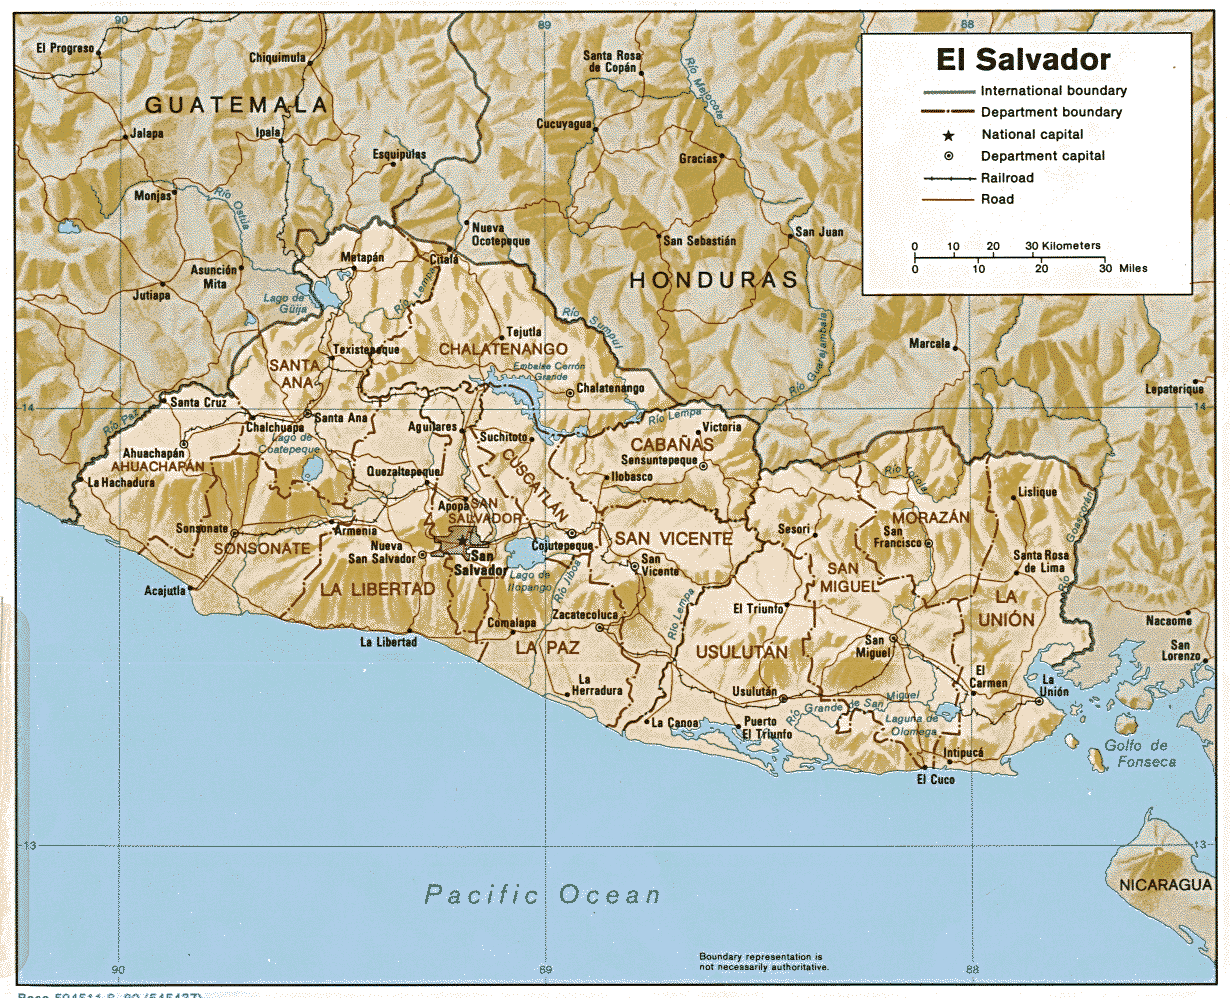 http://www.lib.utexas.edu/maps/americas/el_salvador.gif